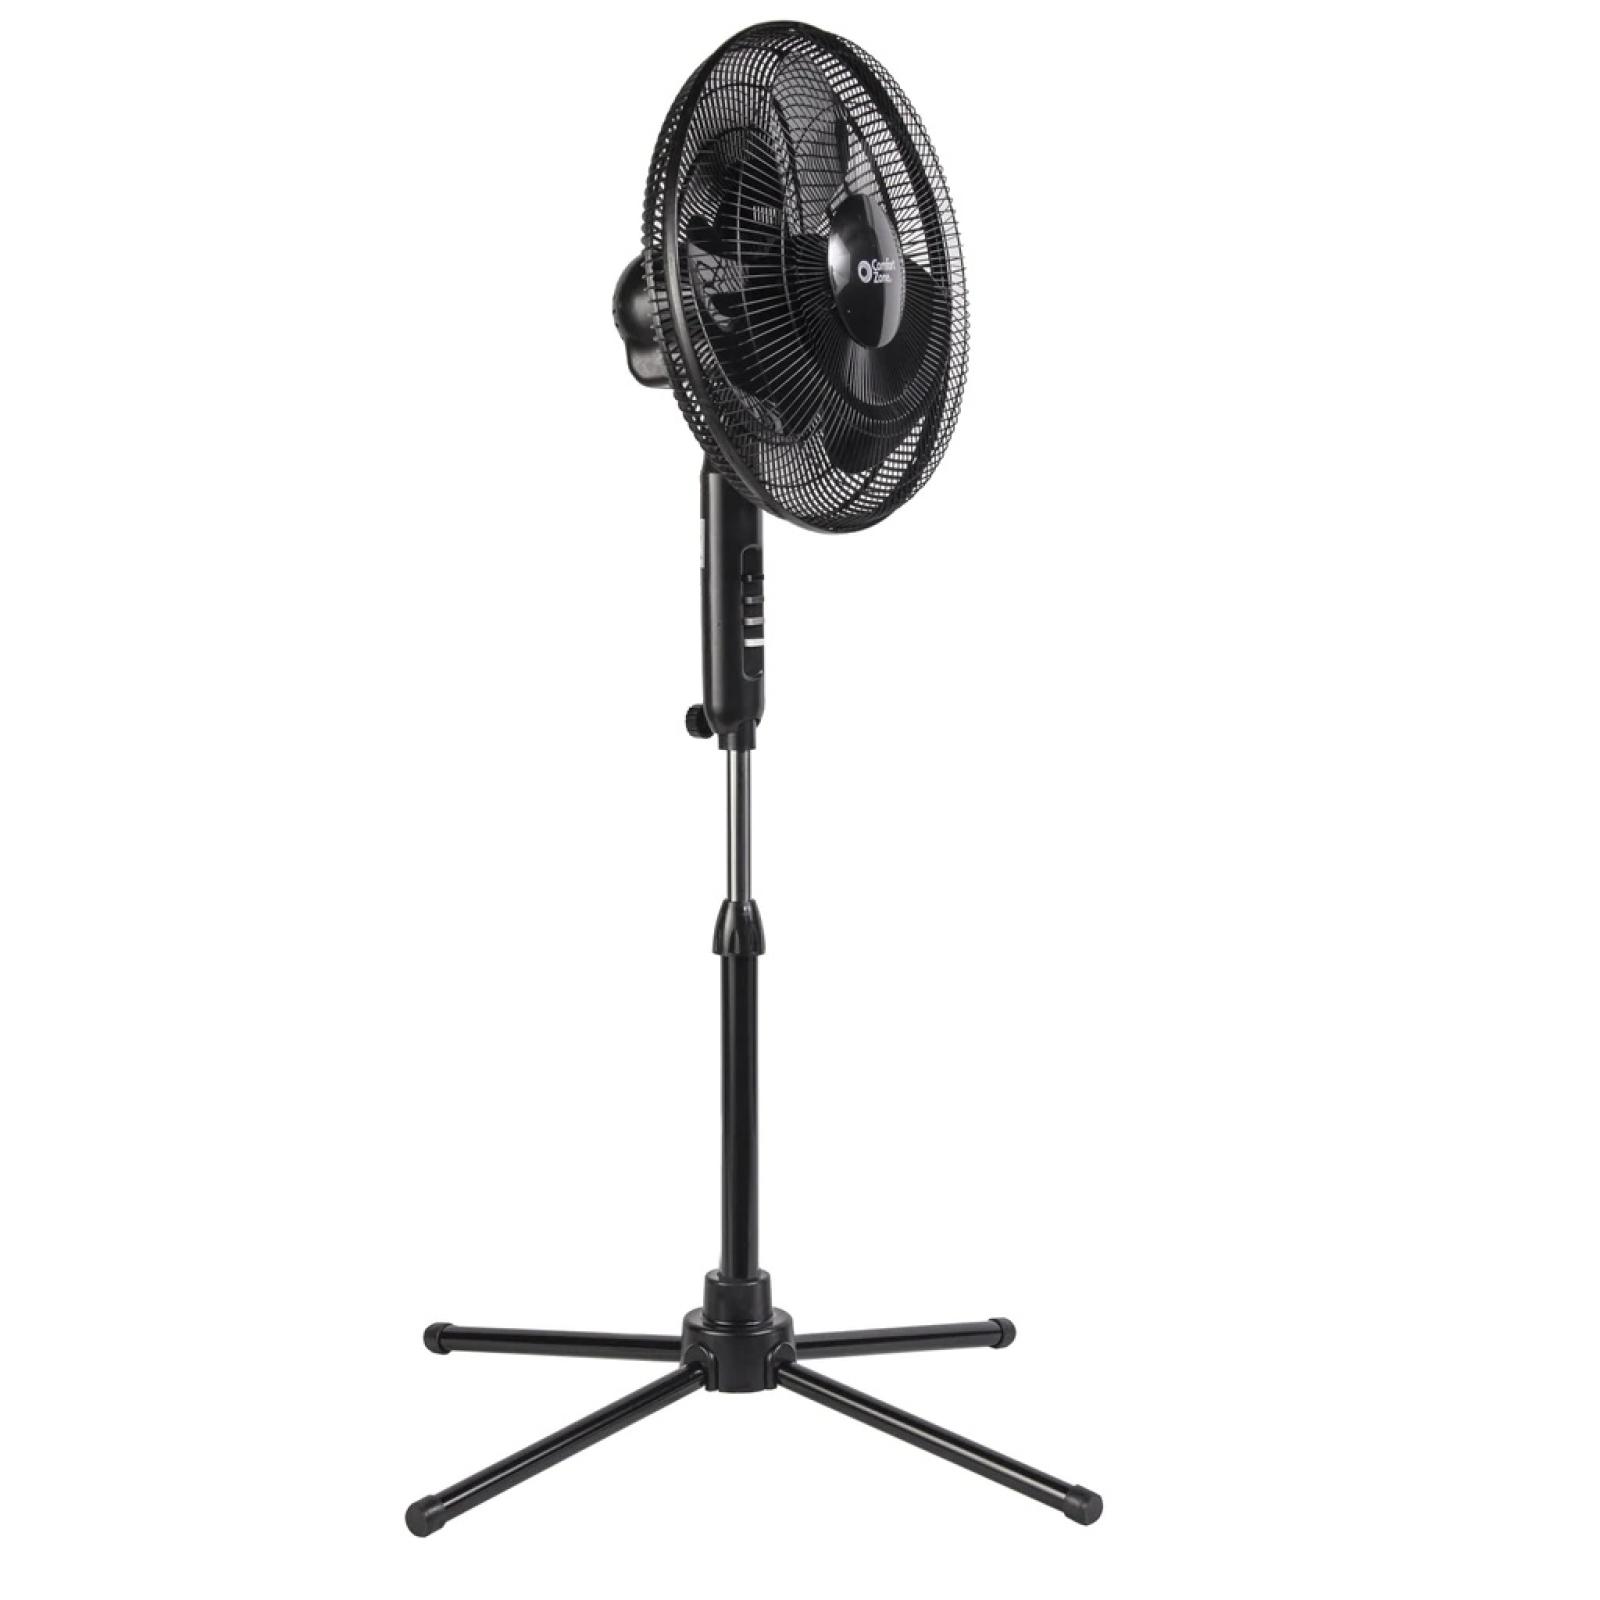 Comfort Zone Adjustable Oscillating Pedestal Fan